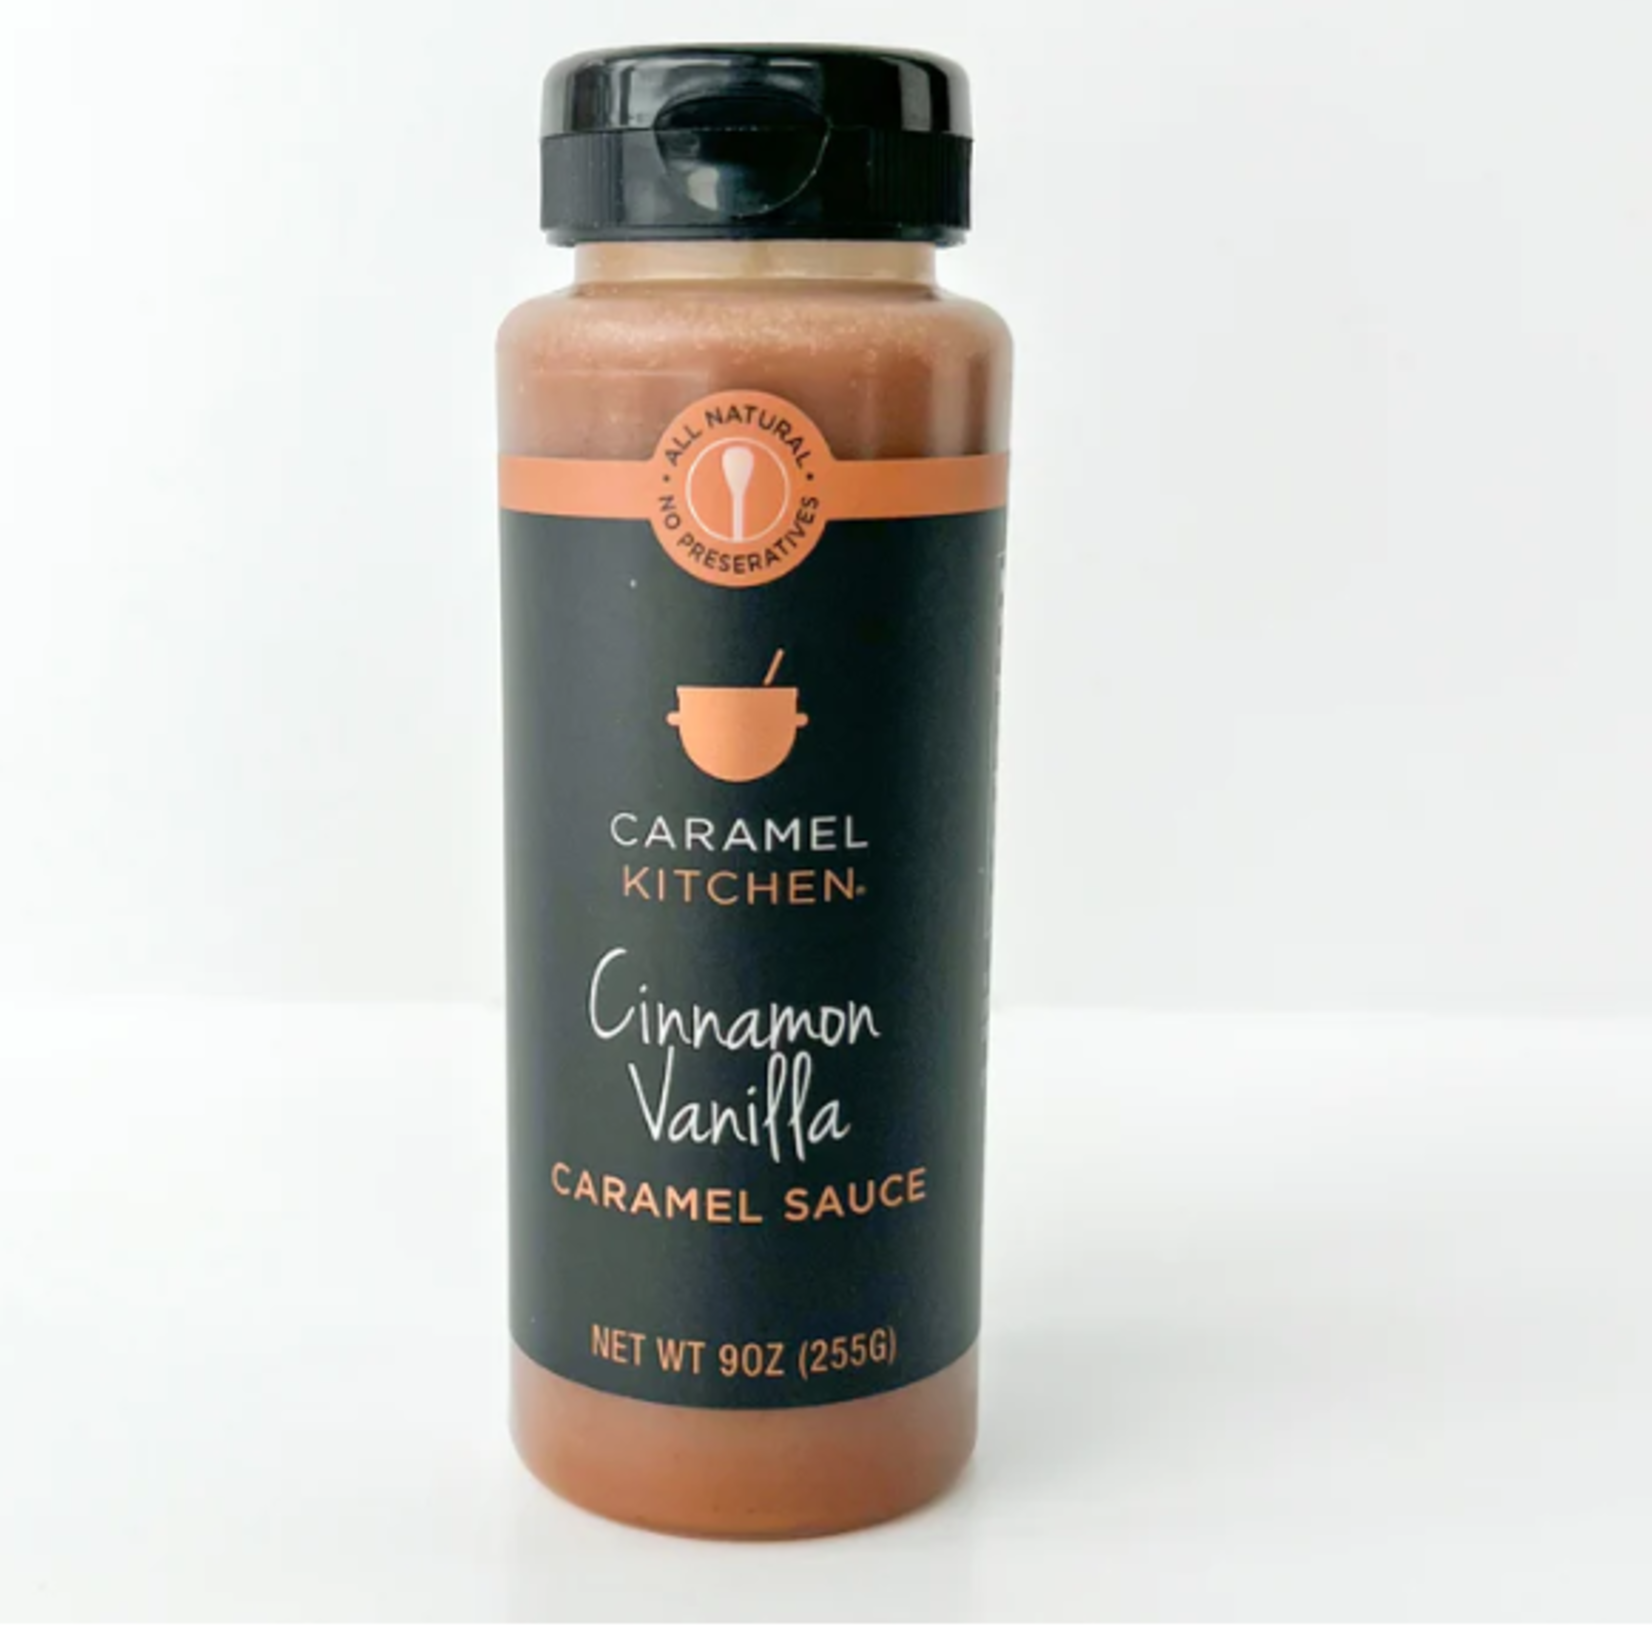 Caramel Kitchen Cinnamon Vanilla Caramel Sauce